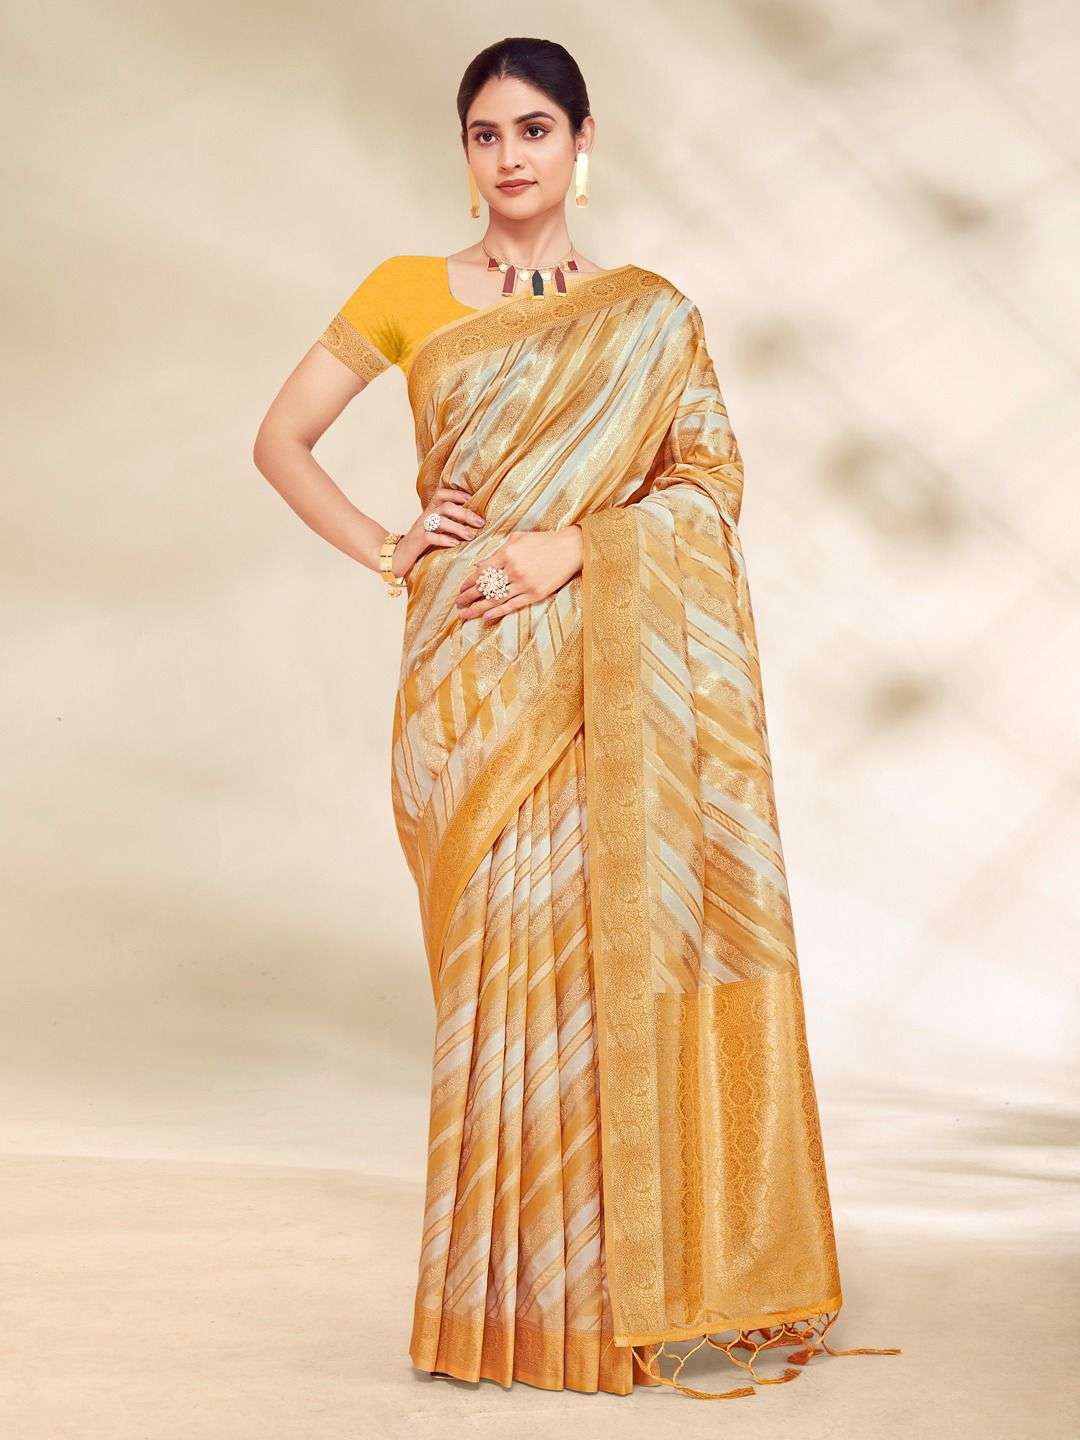 sangam prints bunawat alia silk cotton elegant saree catalog